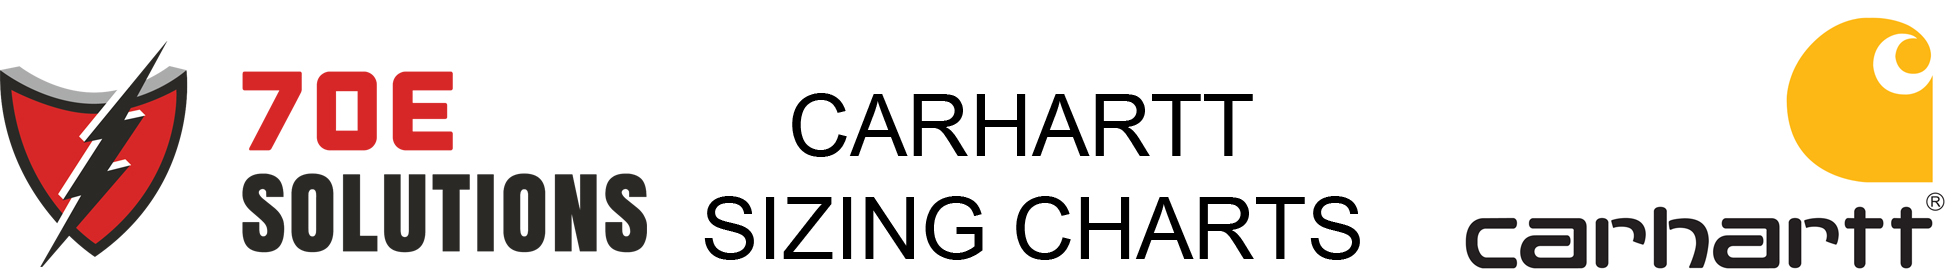 Carhartt sizing charts